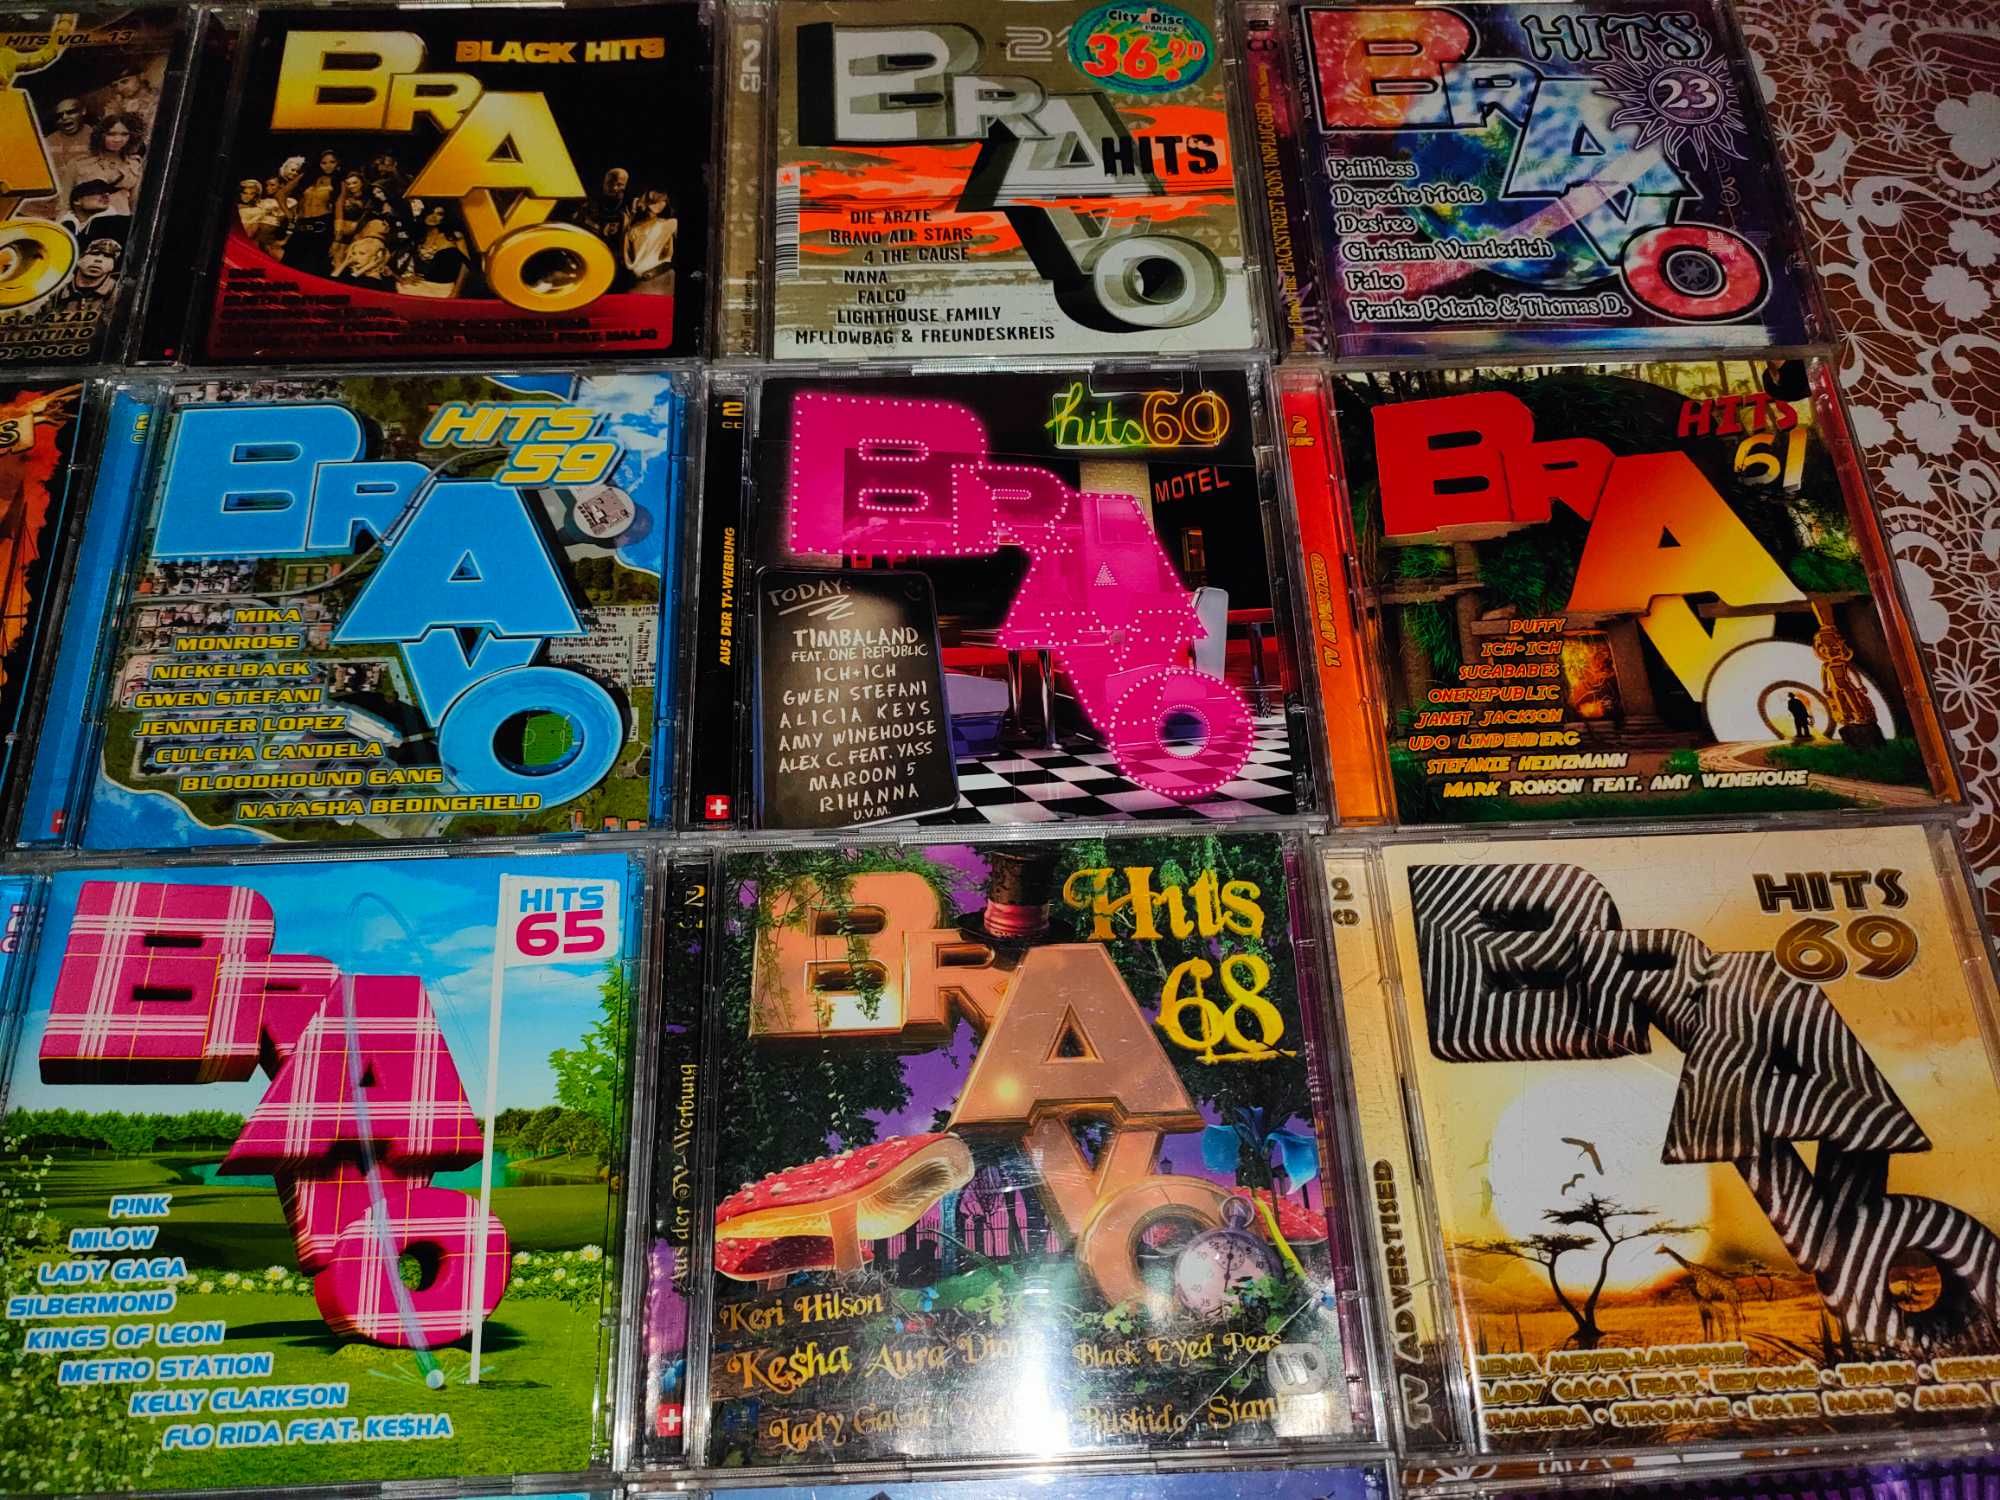 CD-uri Bravo Hits